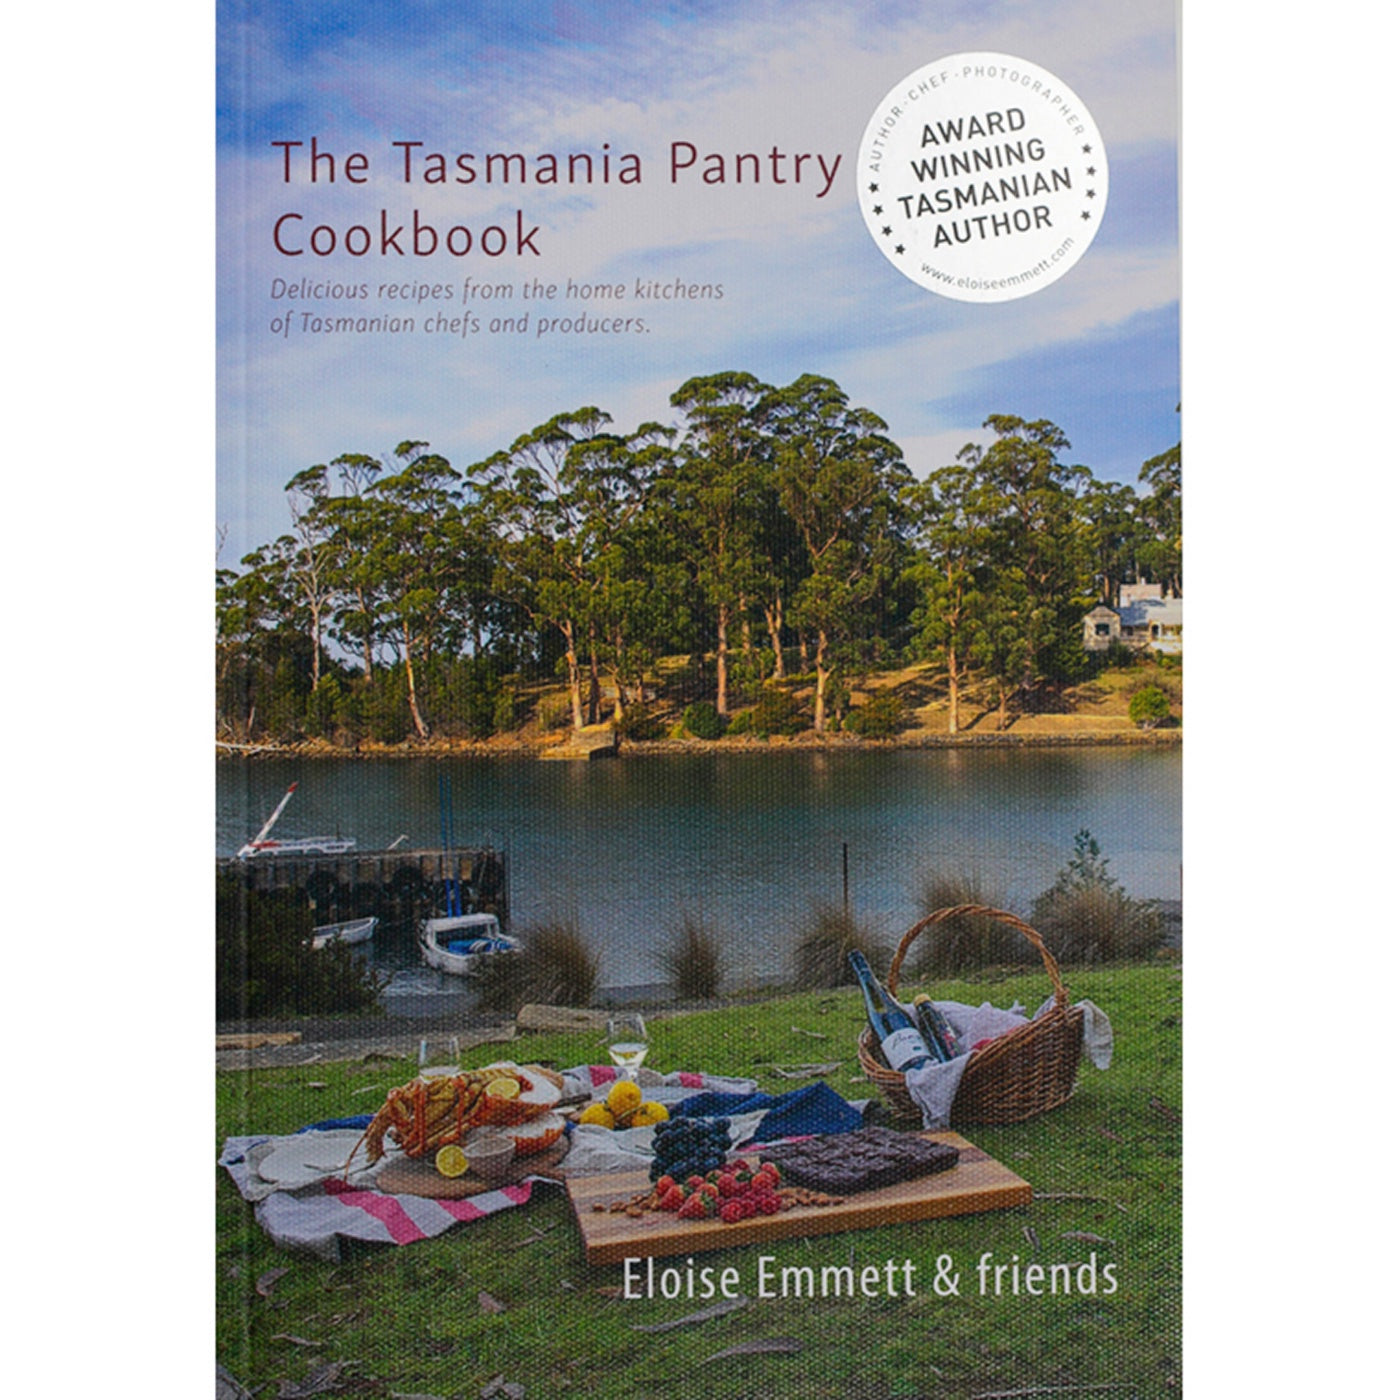 The Tasmania Pantry Cookbook